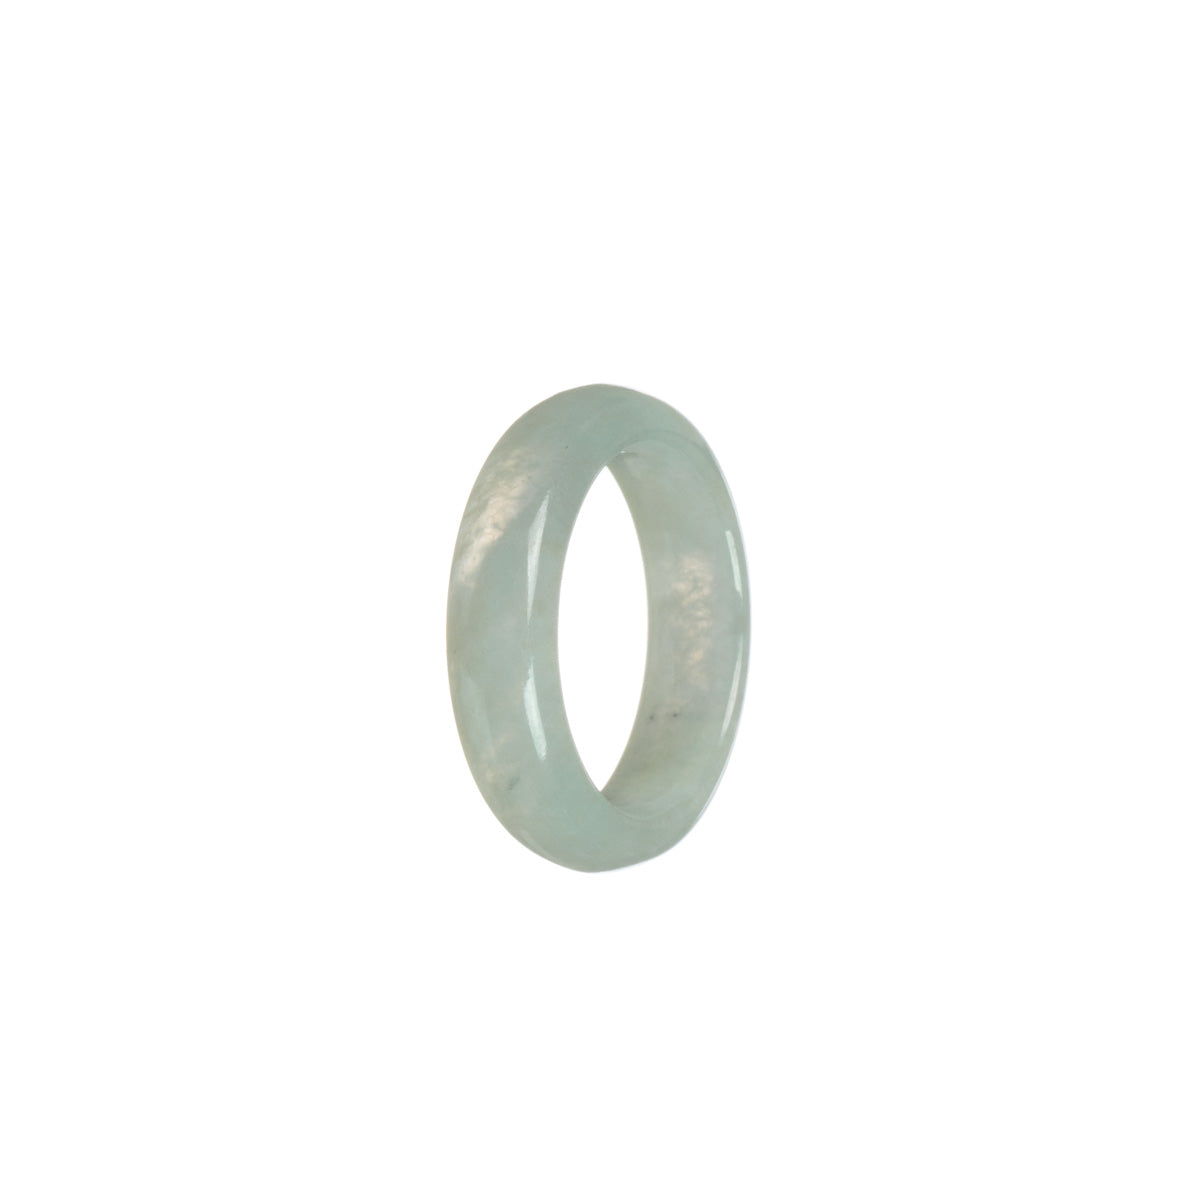 Real White Burmese Jade Ring - Size S